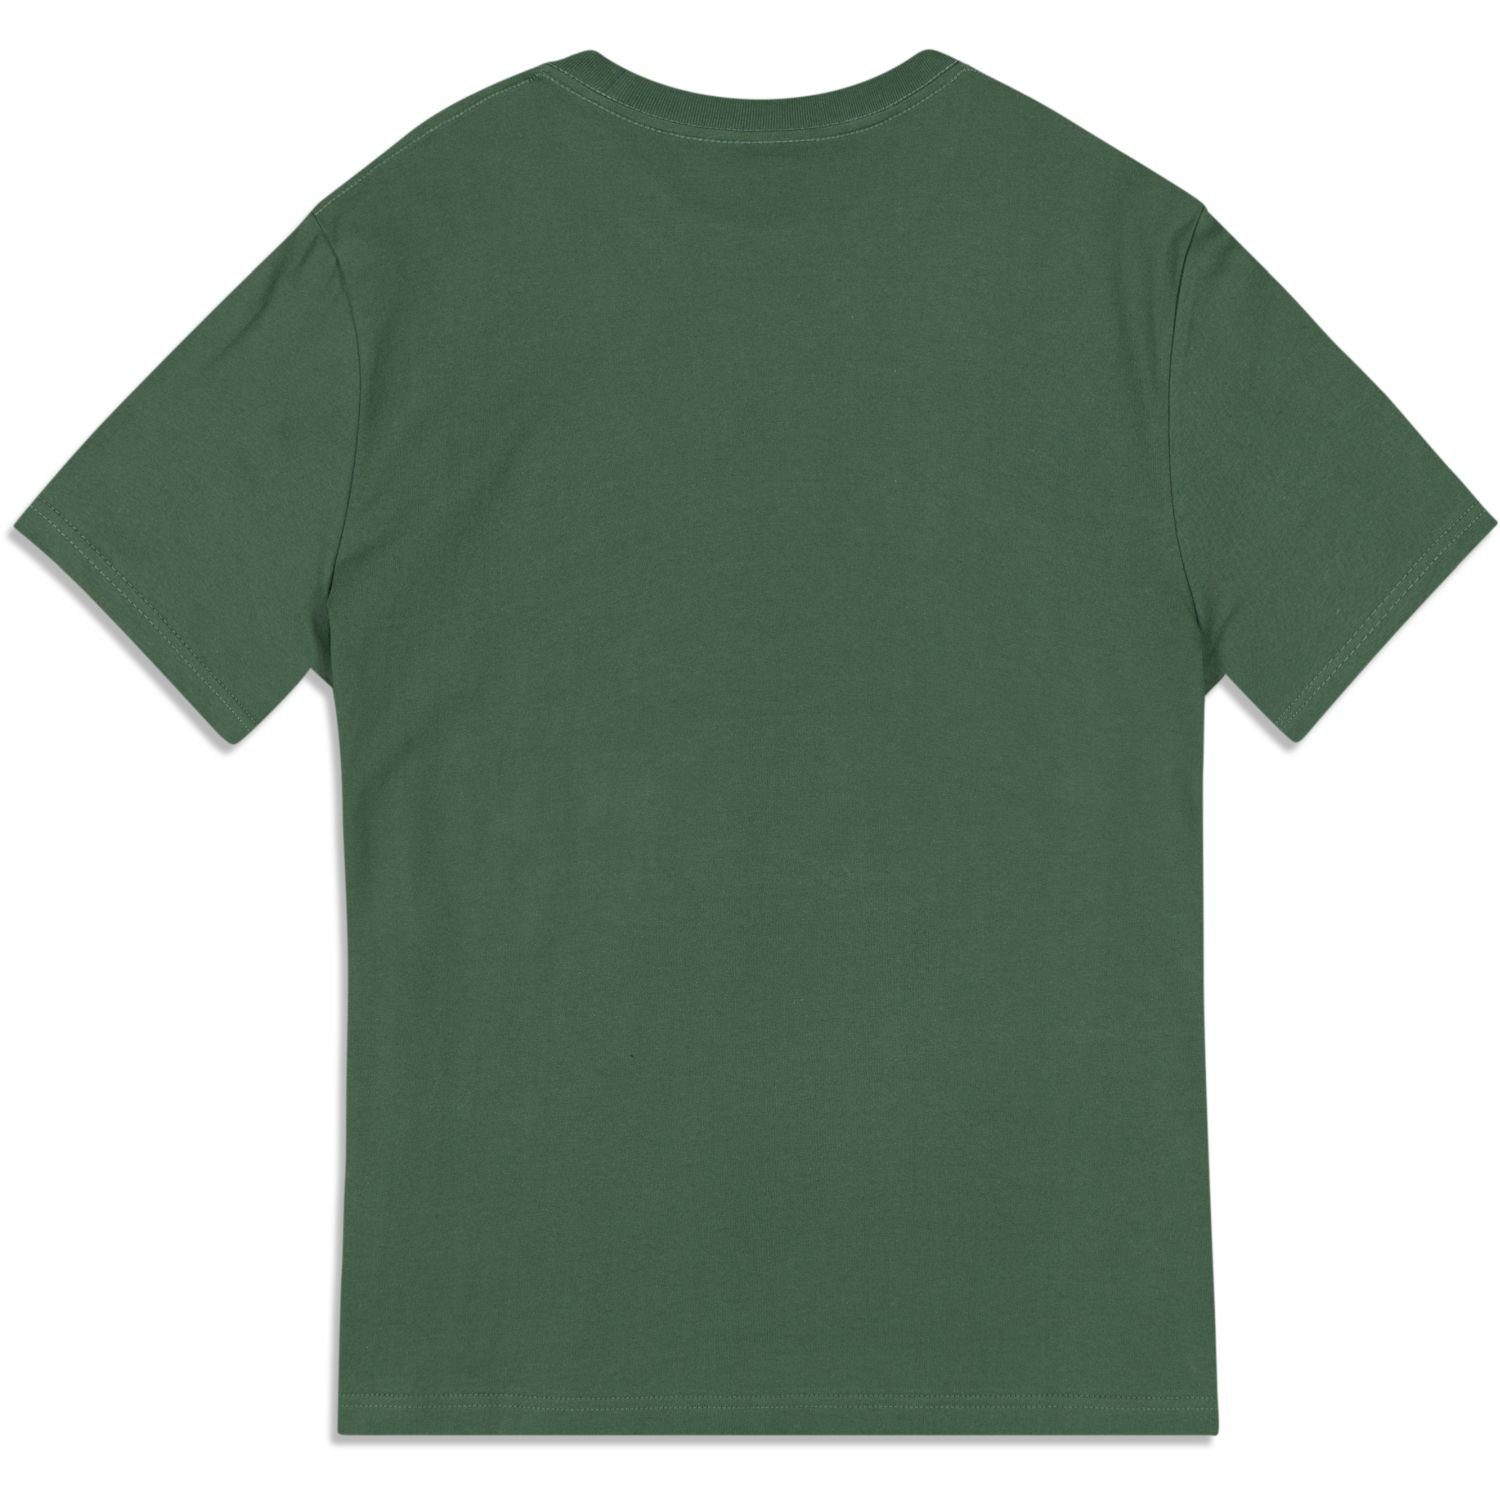 New Era Print-Shirt NFL LETTERMAN Bay Green Packers